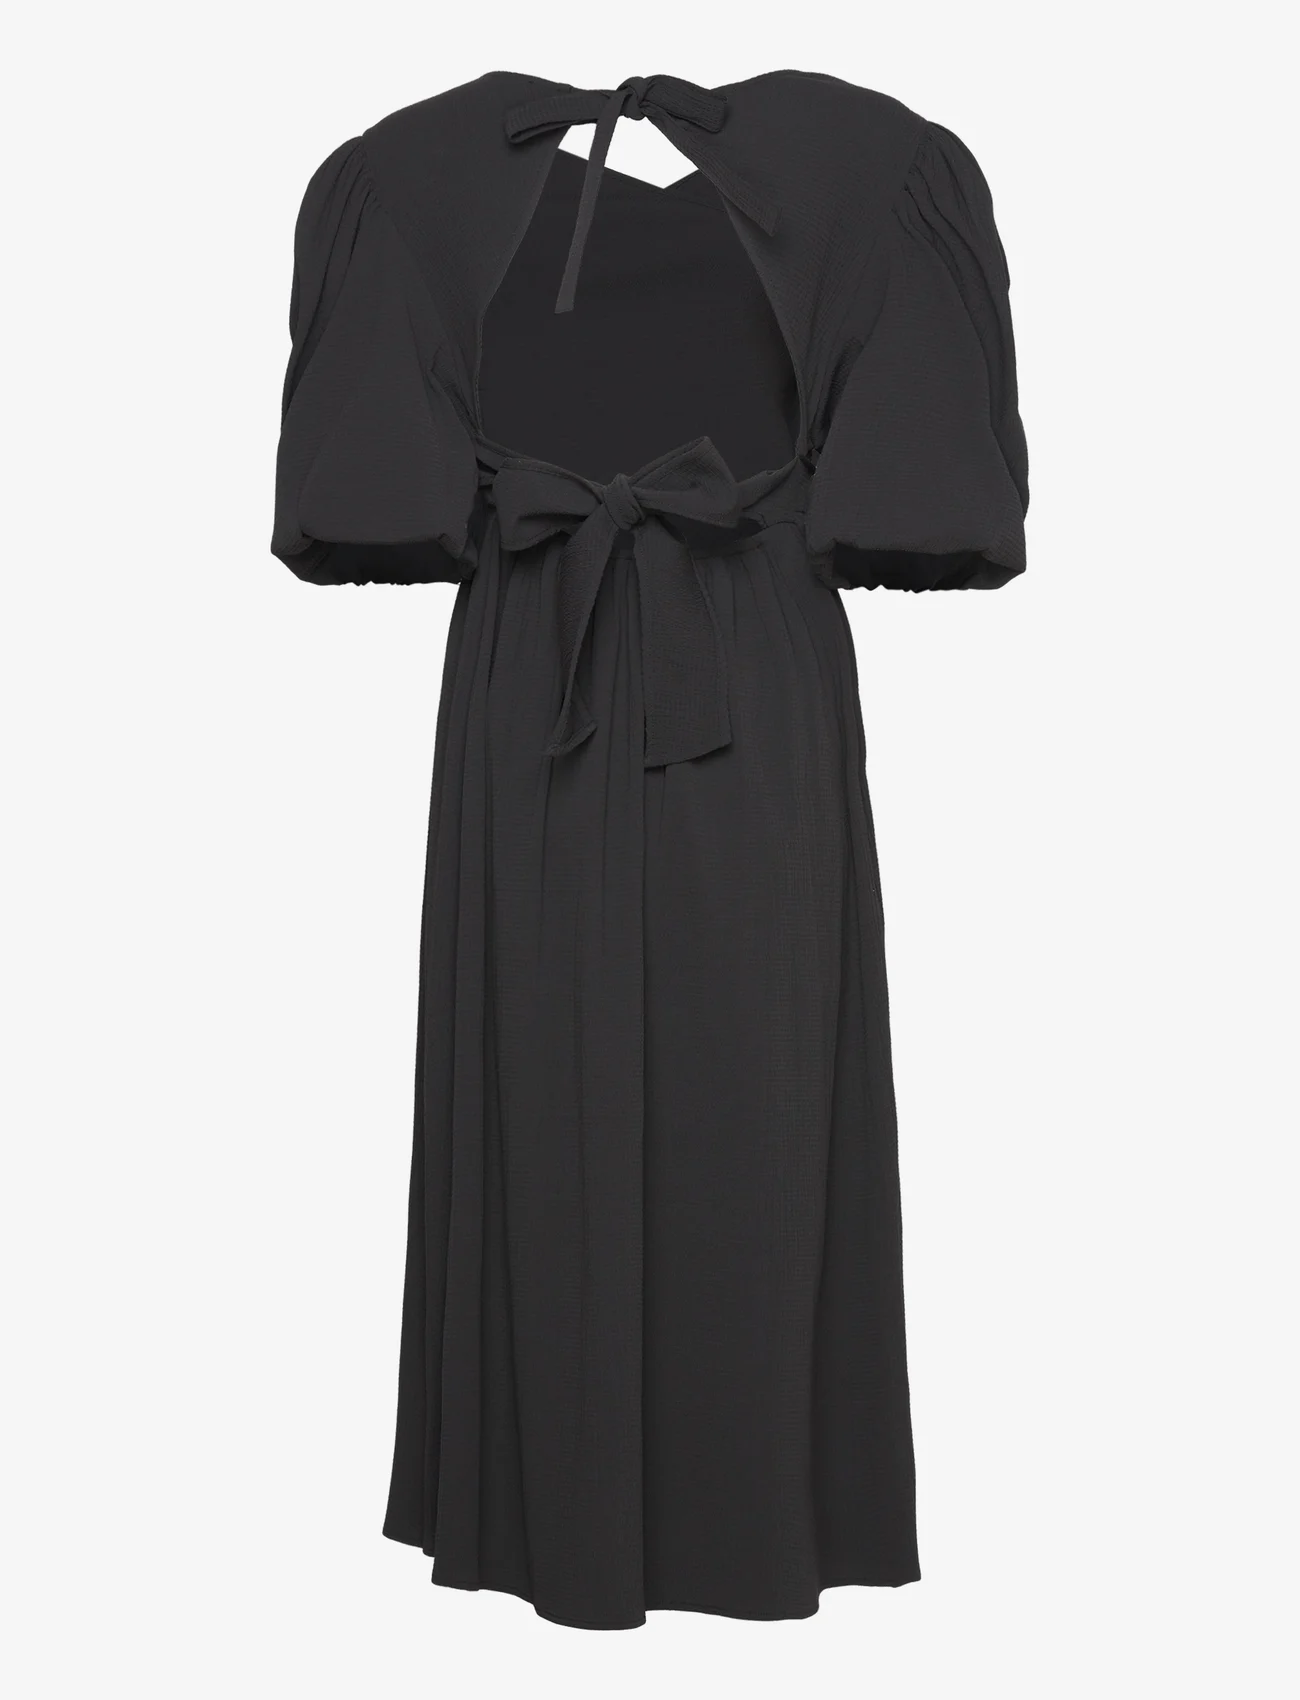 NORR - Lamara dress - midi dresses - black - 1